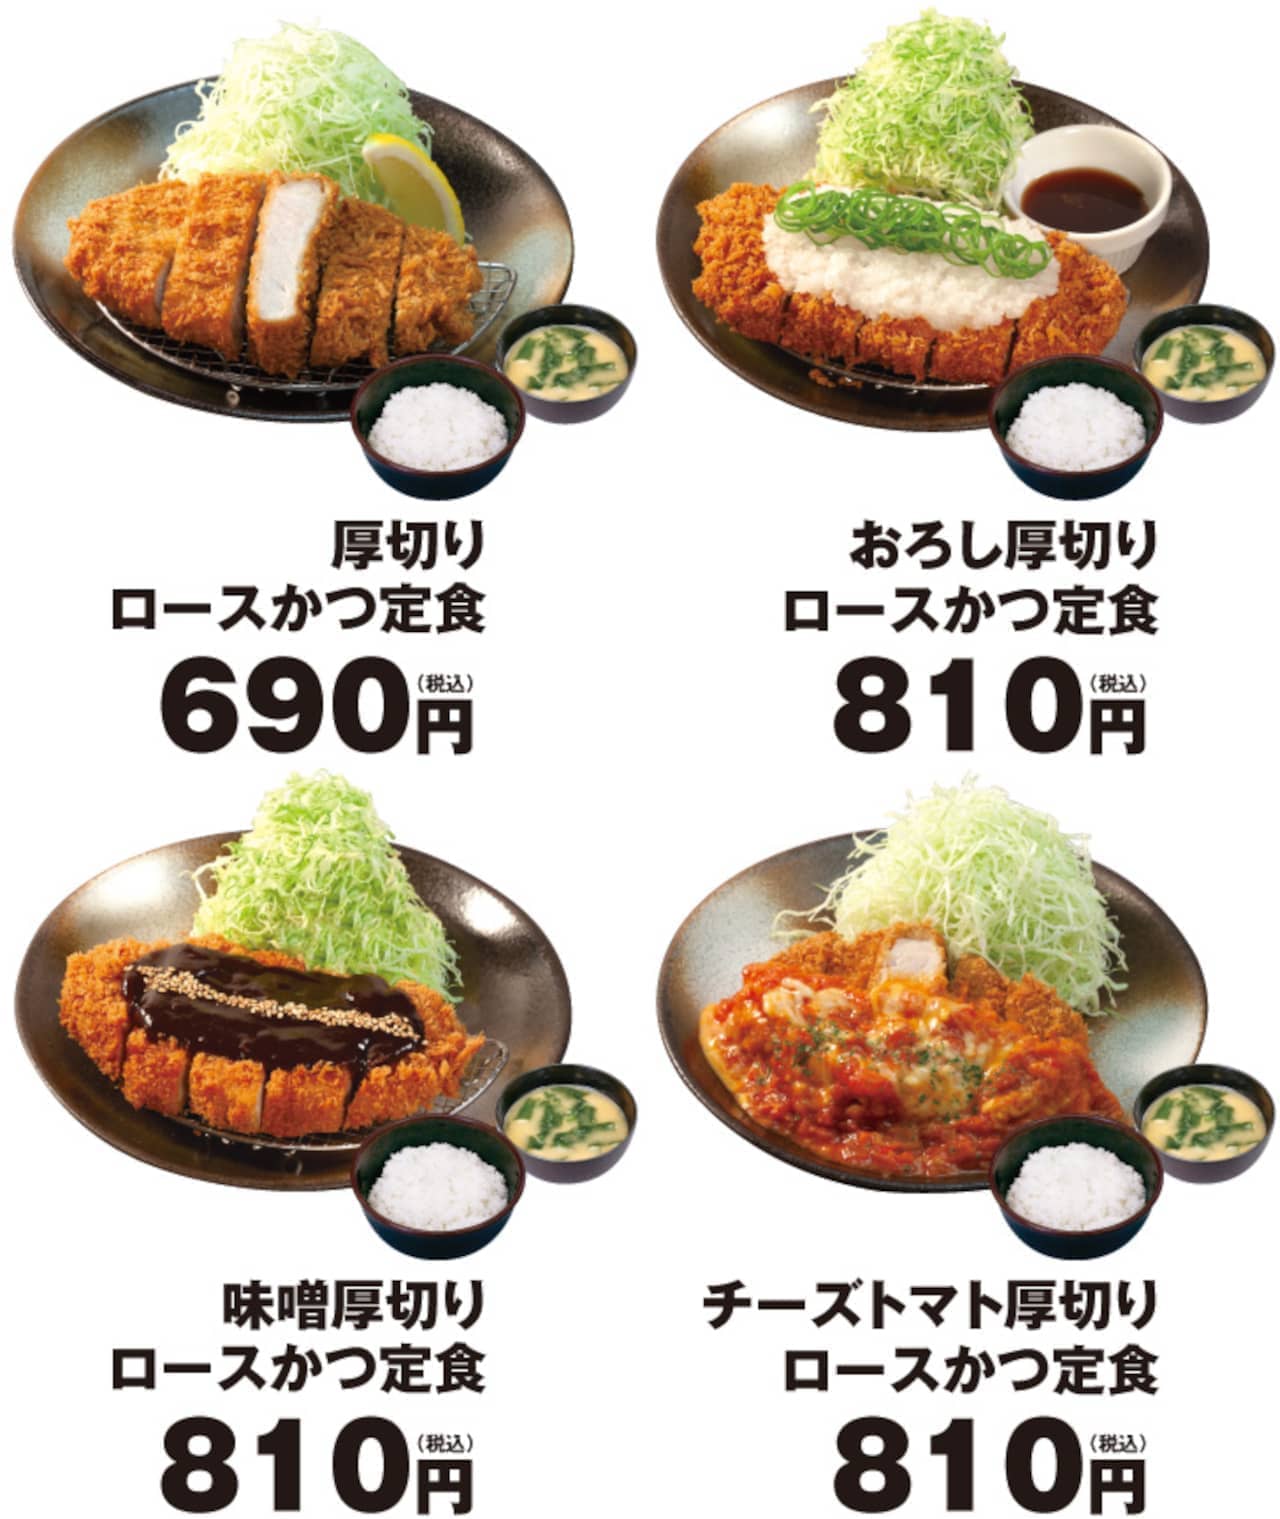 "Thick sliced loin and set meal" at Matsuya